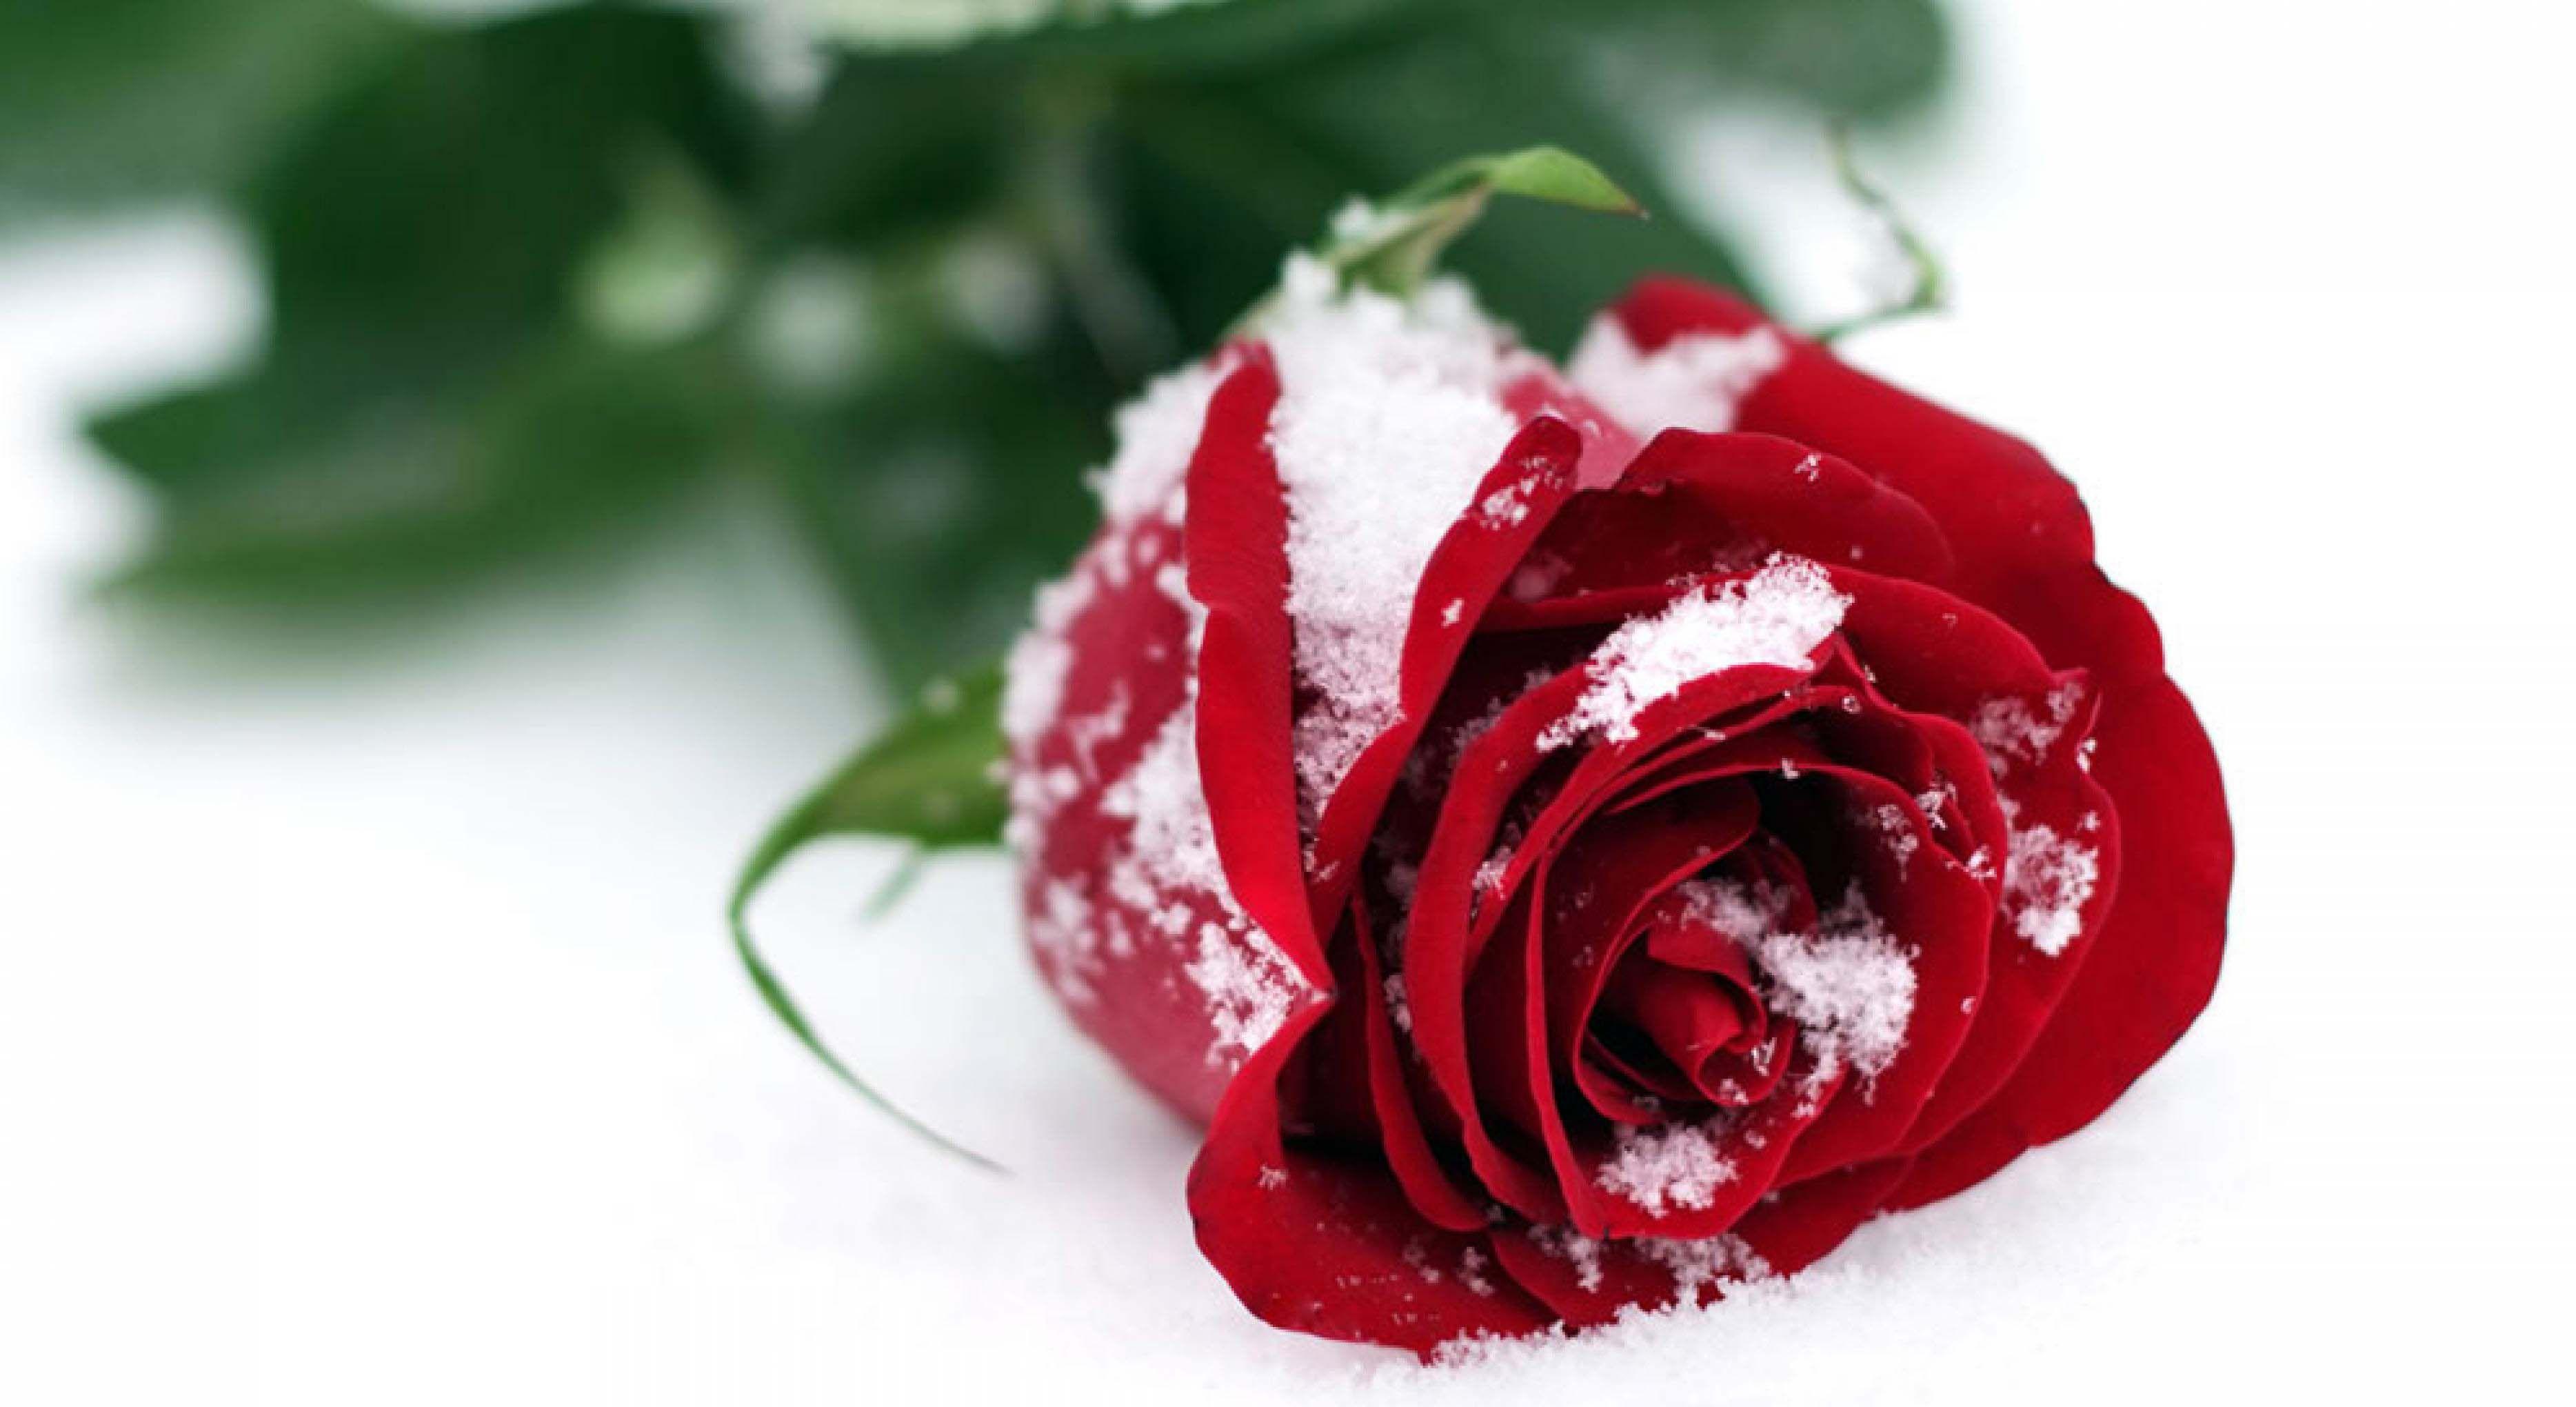 Winter Snow Rose Image HD Desktop Wallpaper. Snow rose, Rose flower wallpaper, Rose image